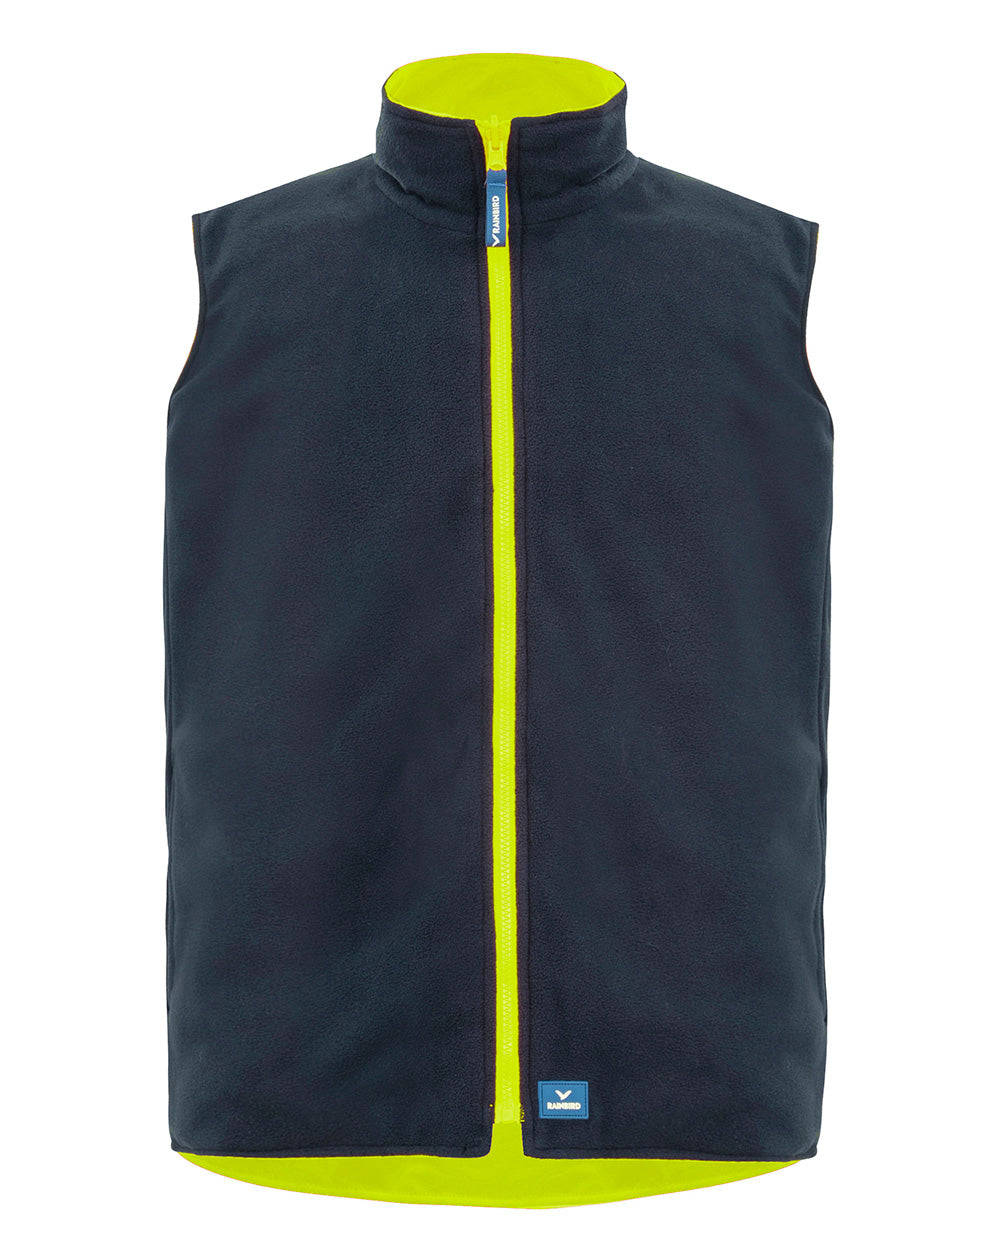 4-in-1 Utility Jacket & Vest in Fluoro Yellow & Navy